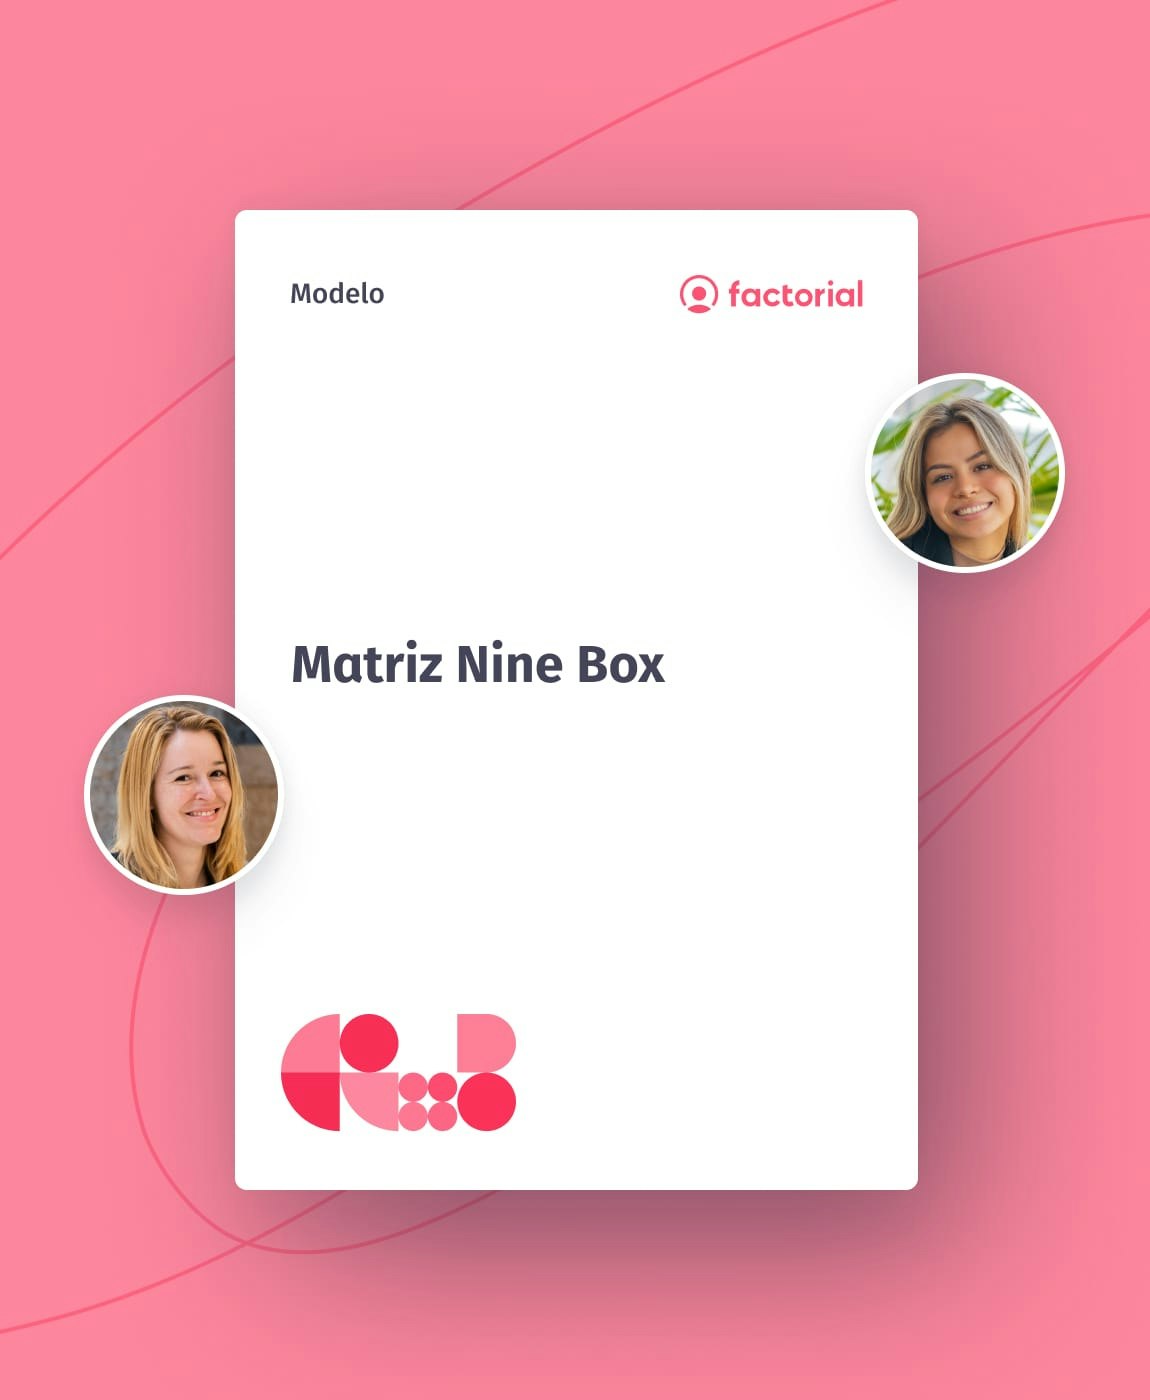 Matriz Nine Box